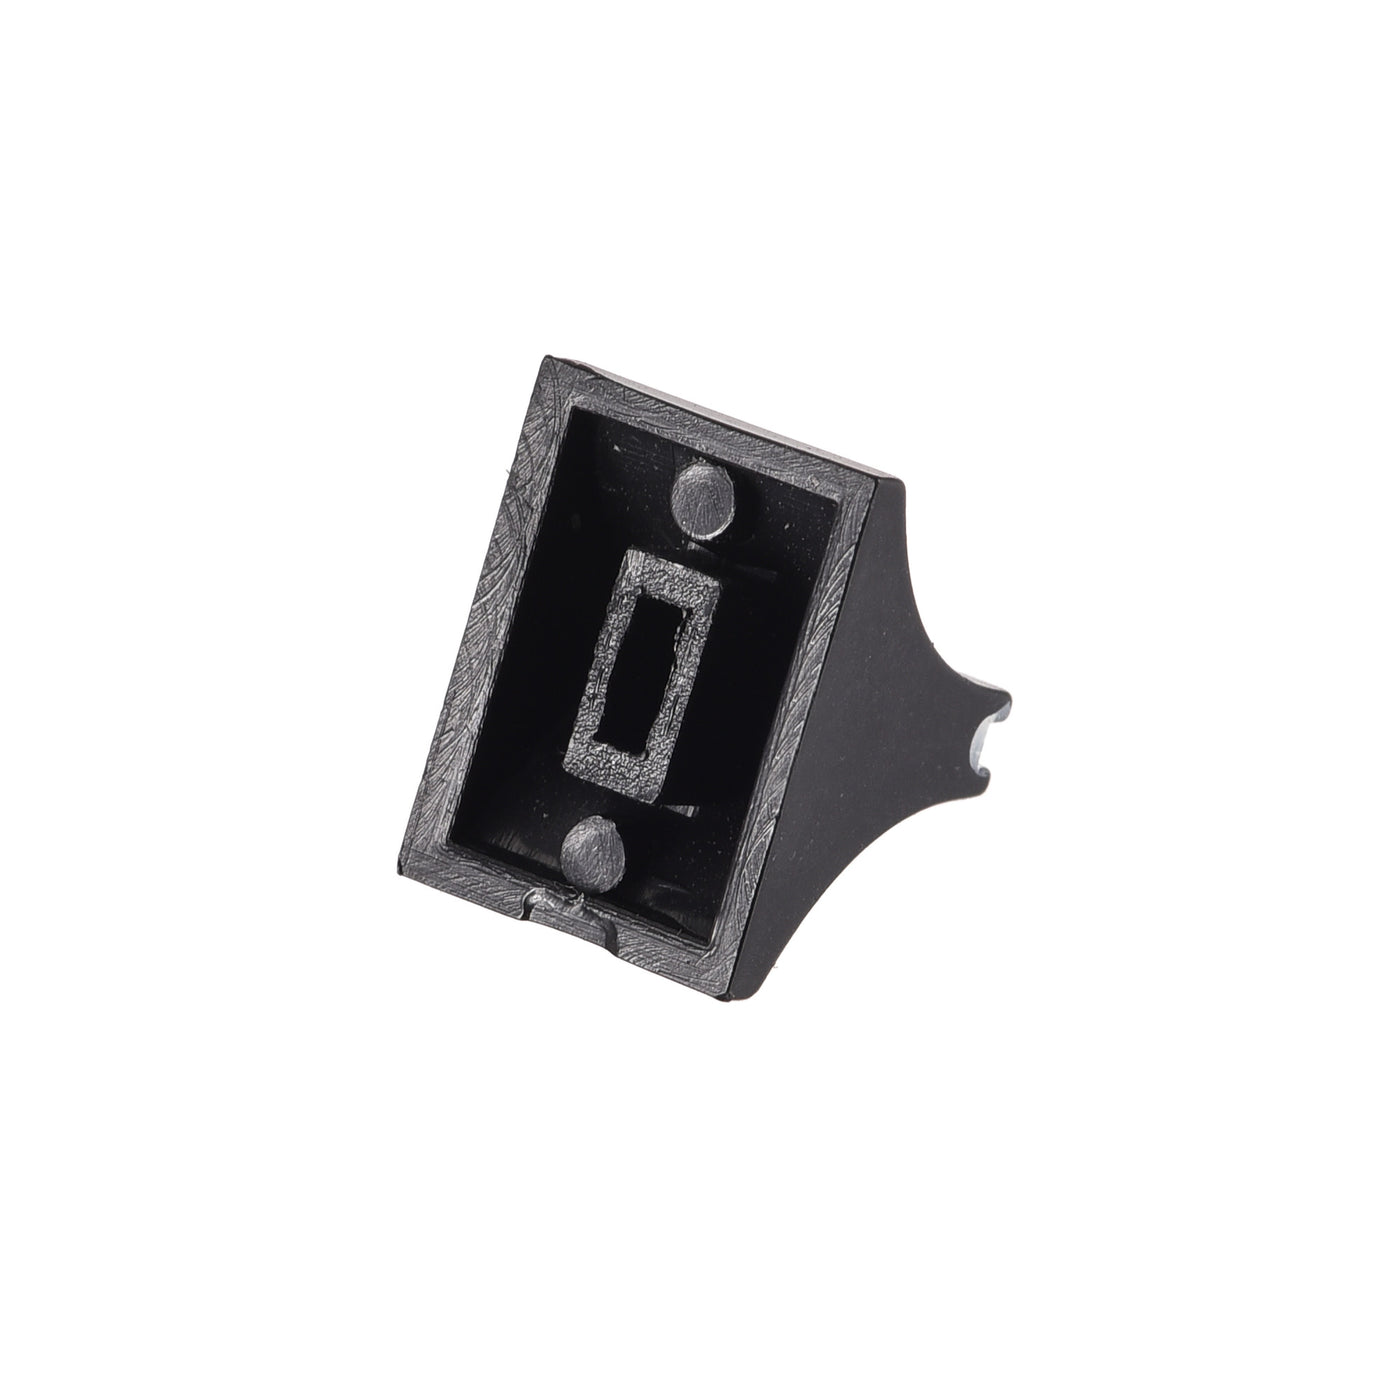 Uxcell Uxcell Plastic Straight Slide Potentiometer Flat Push Knob Insert Shaft 4x1.6mm Silver Black 5pcs